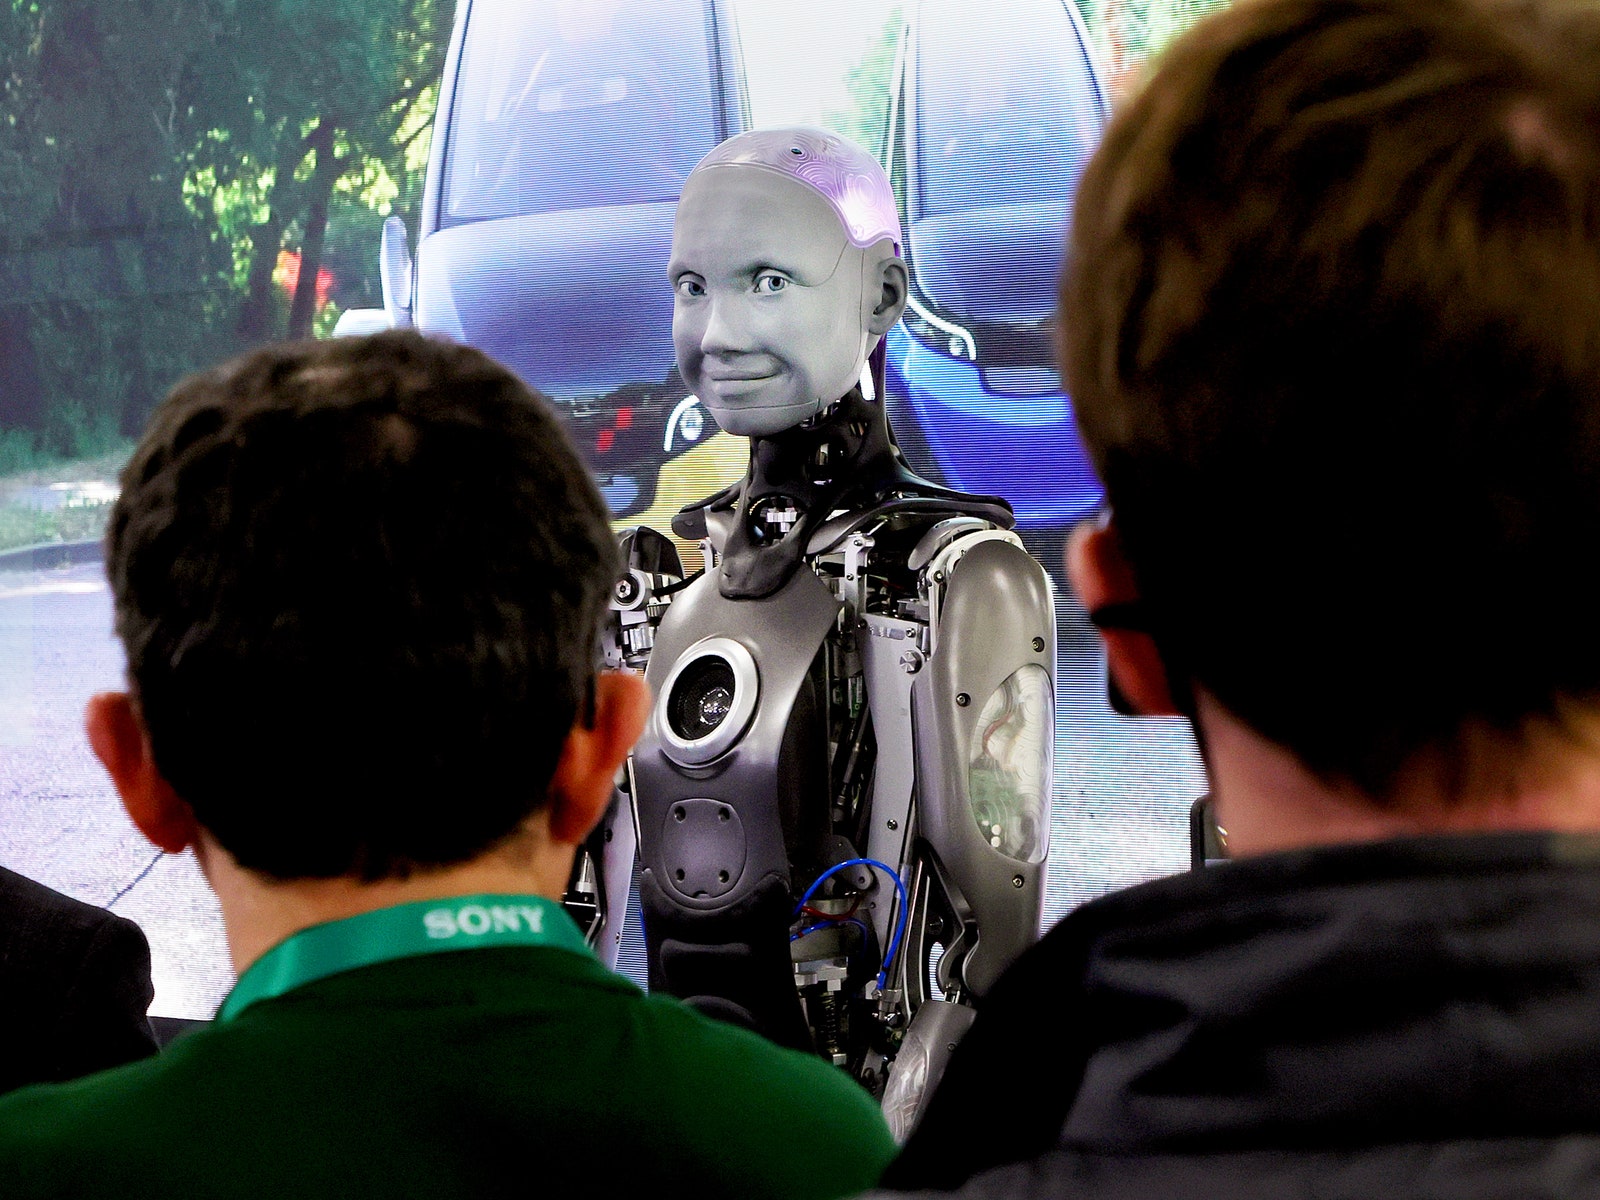 Ameca humanoid robot at CES 2022